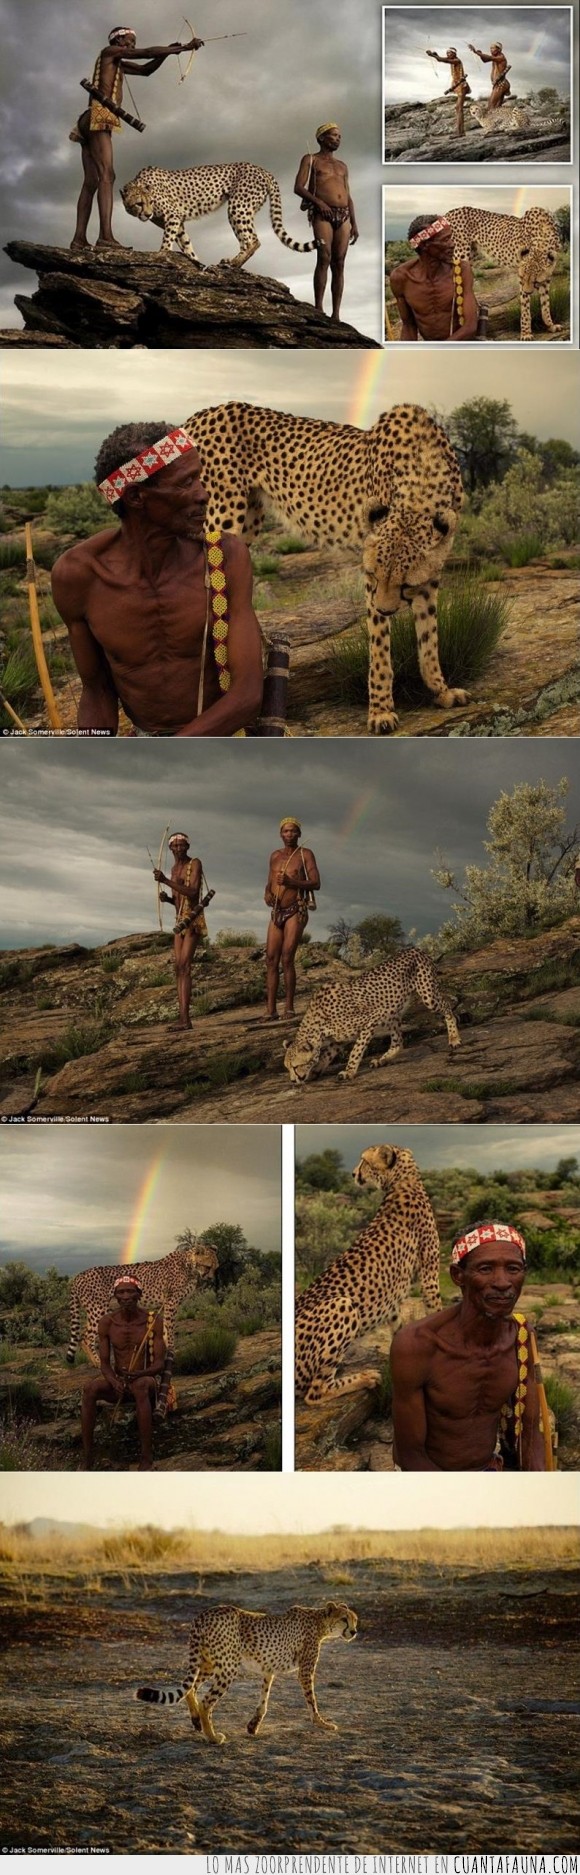 África,basarwa,bosquimanos,cazar,guepardos,Jack Somerville,Namibia,tribu,Tribu San